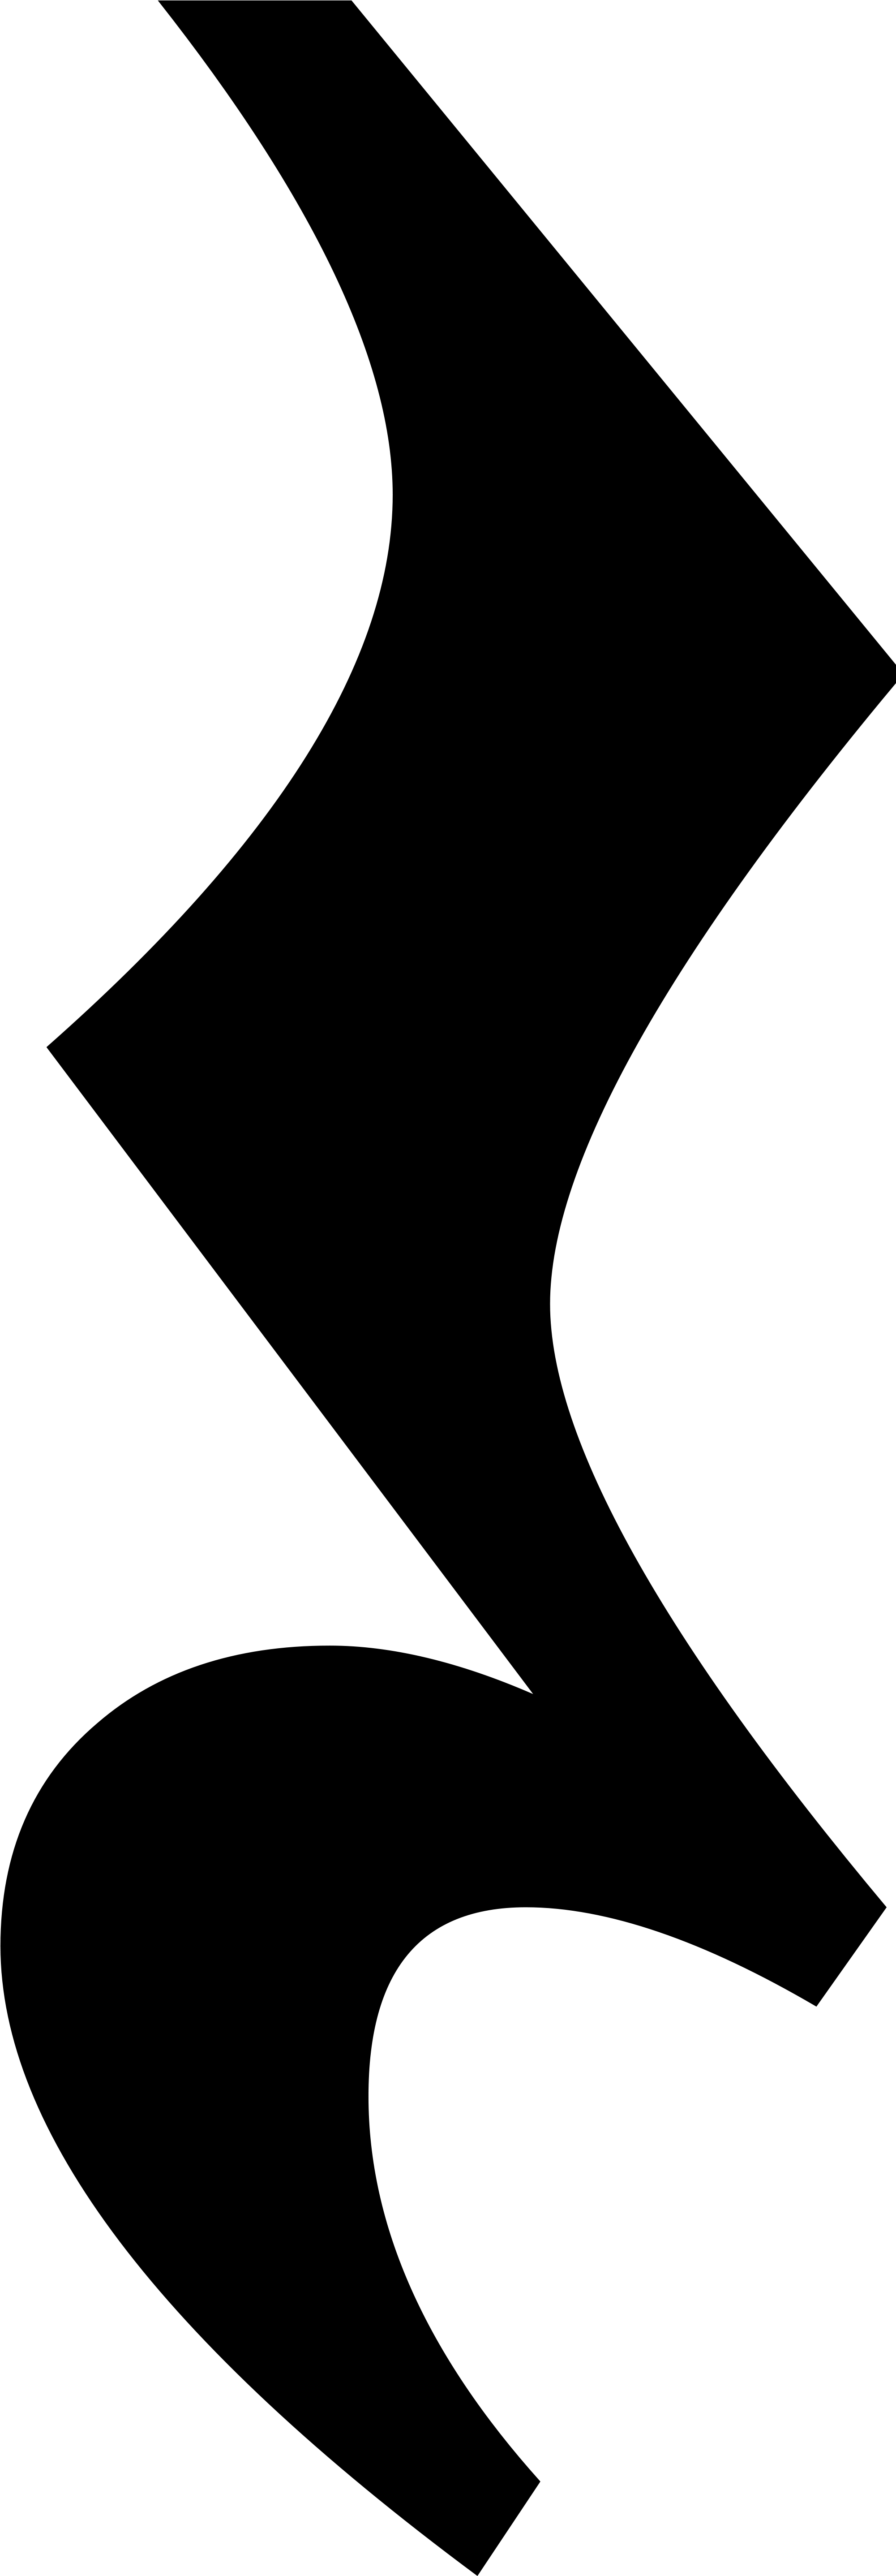 Open - Music Symbols Quarter Rest (2000x5769)